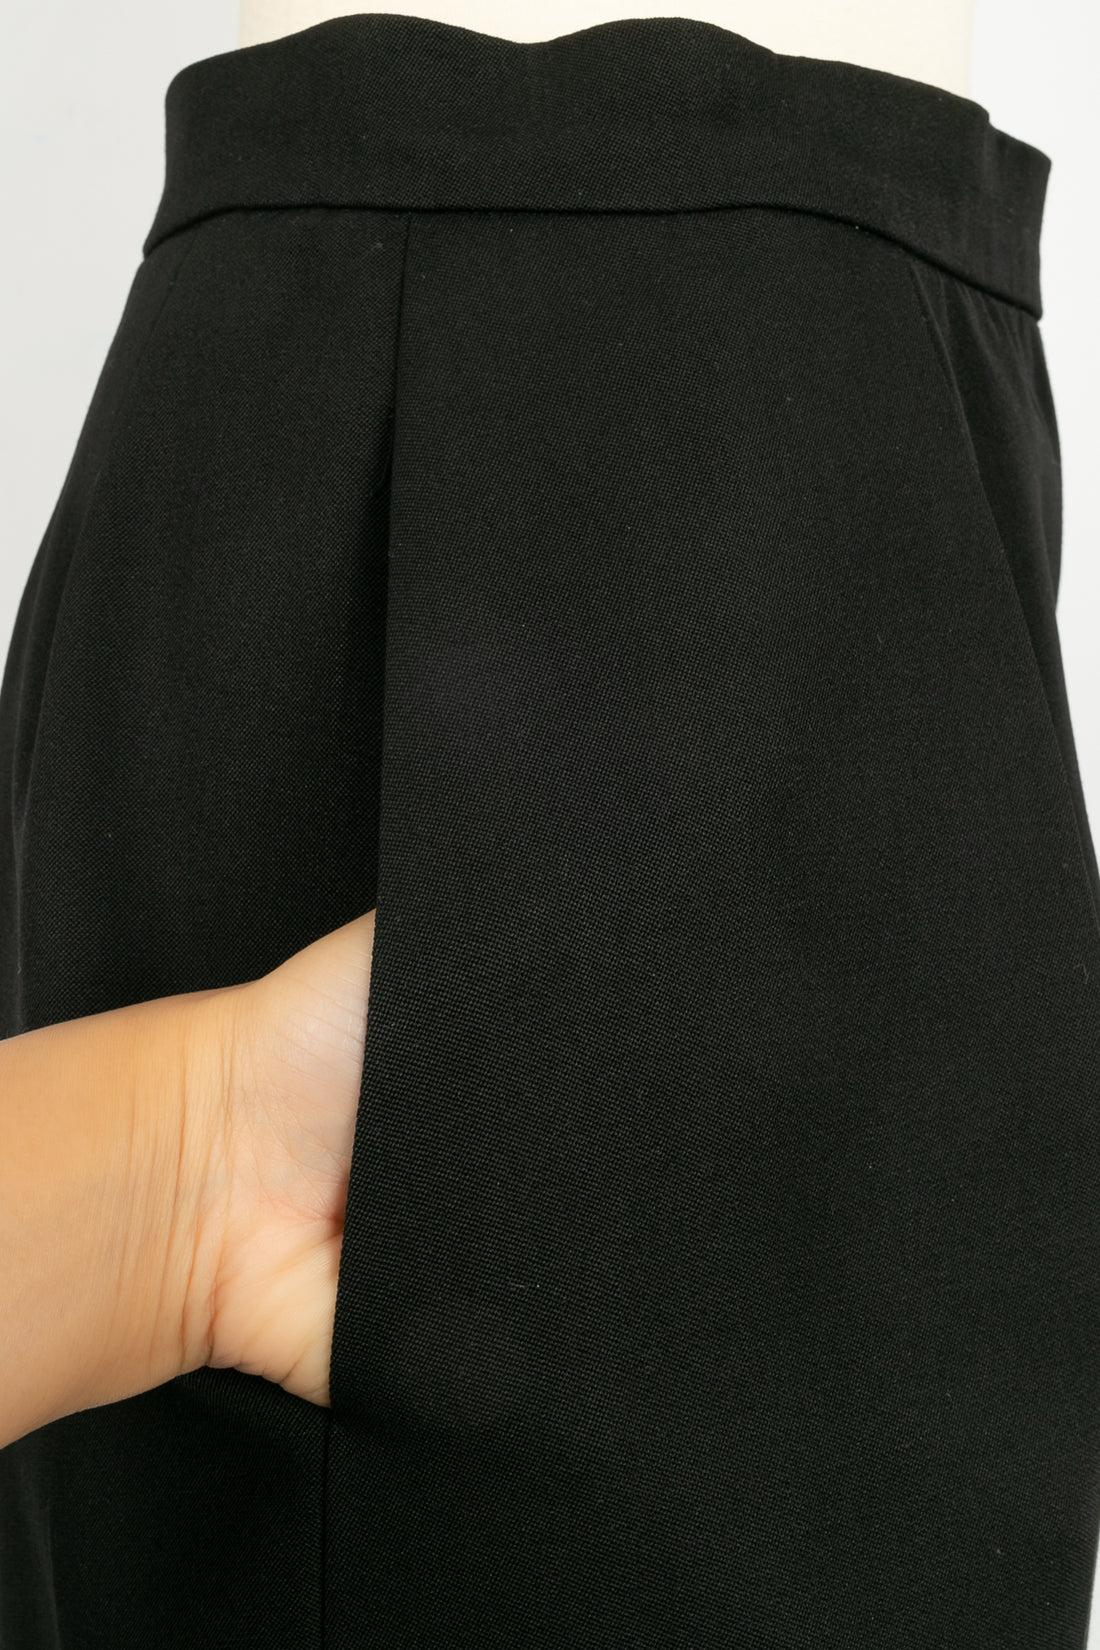 Yves Saint Laurent Black Skirt Suit For Sale 8